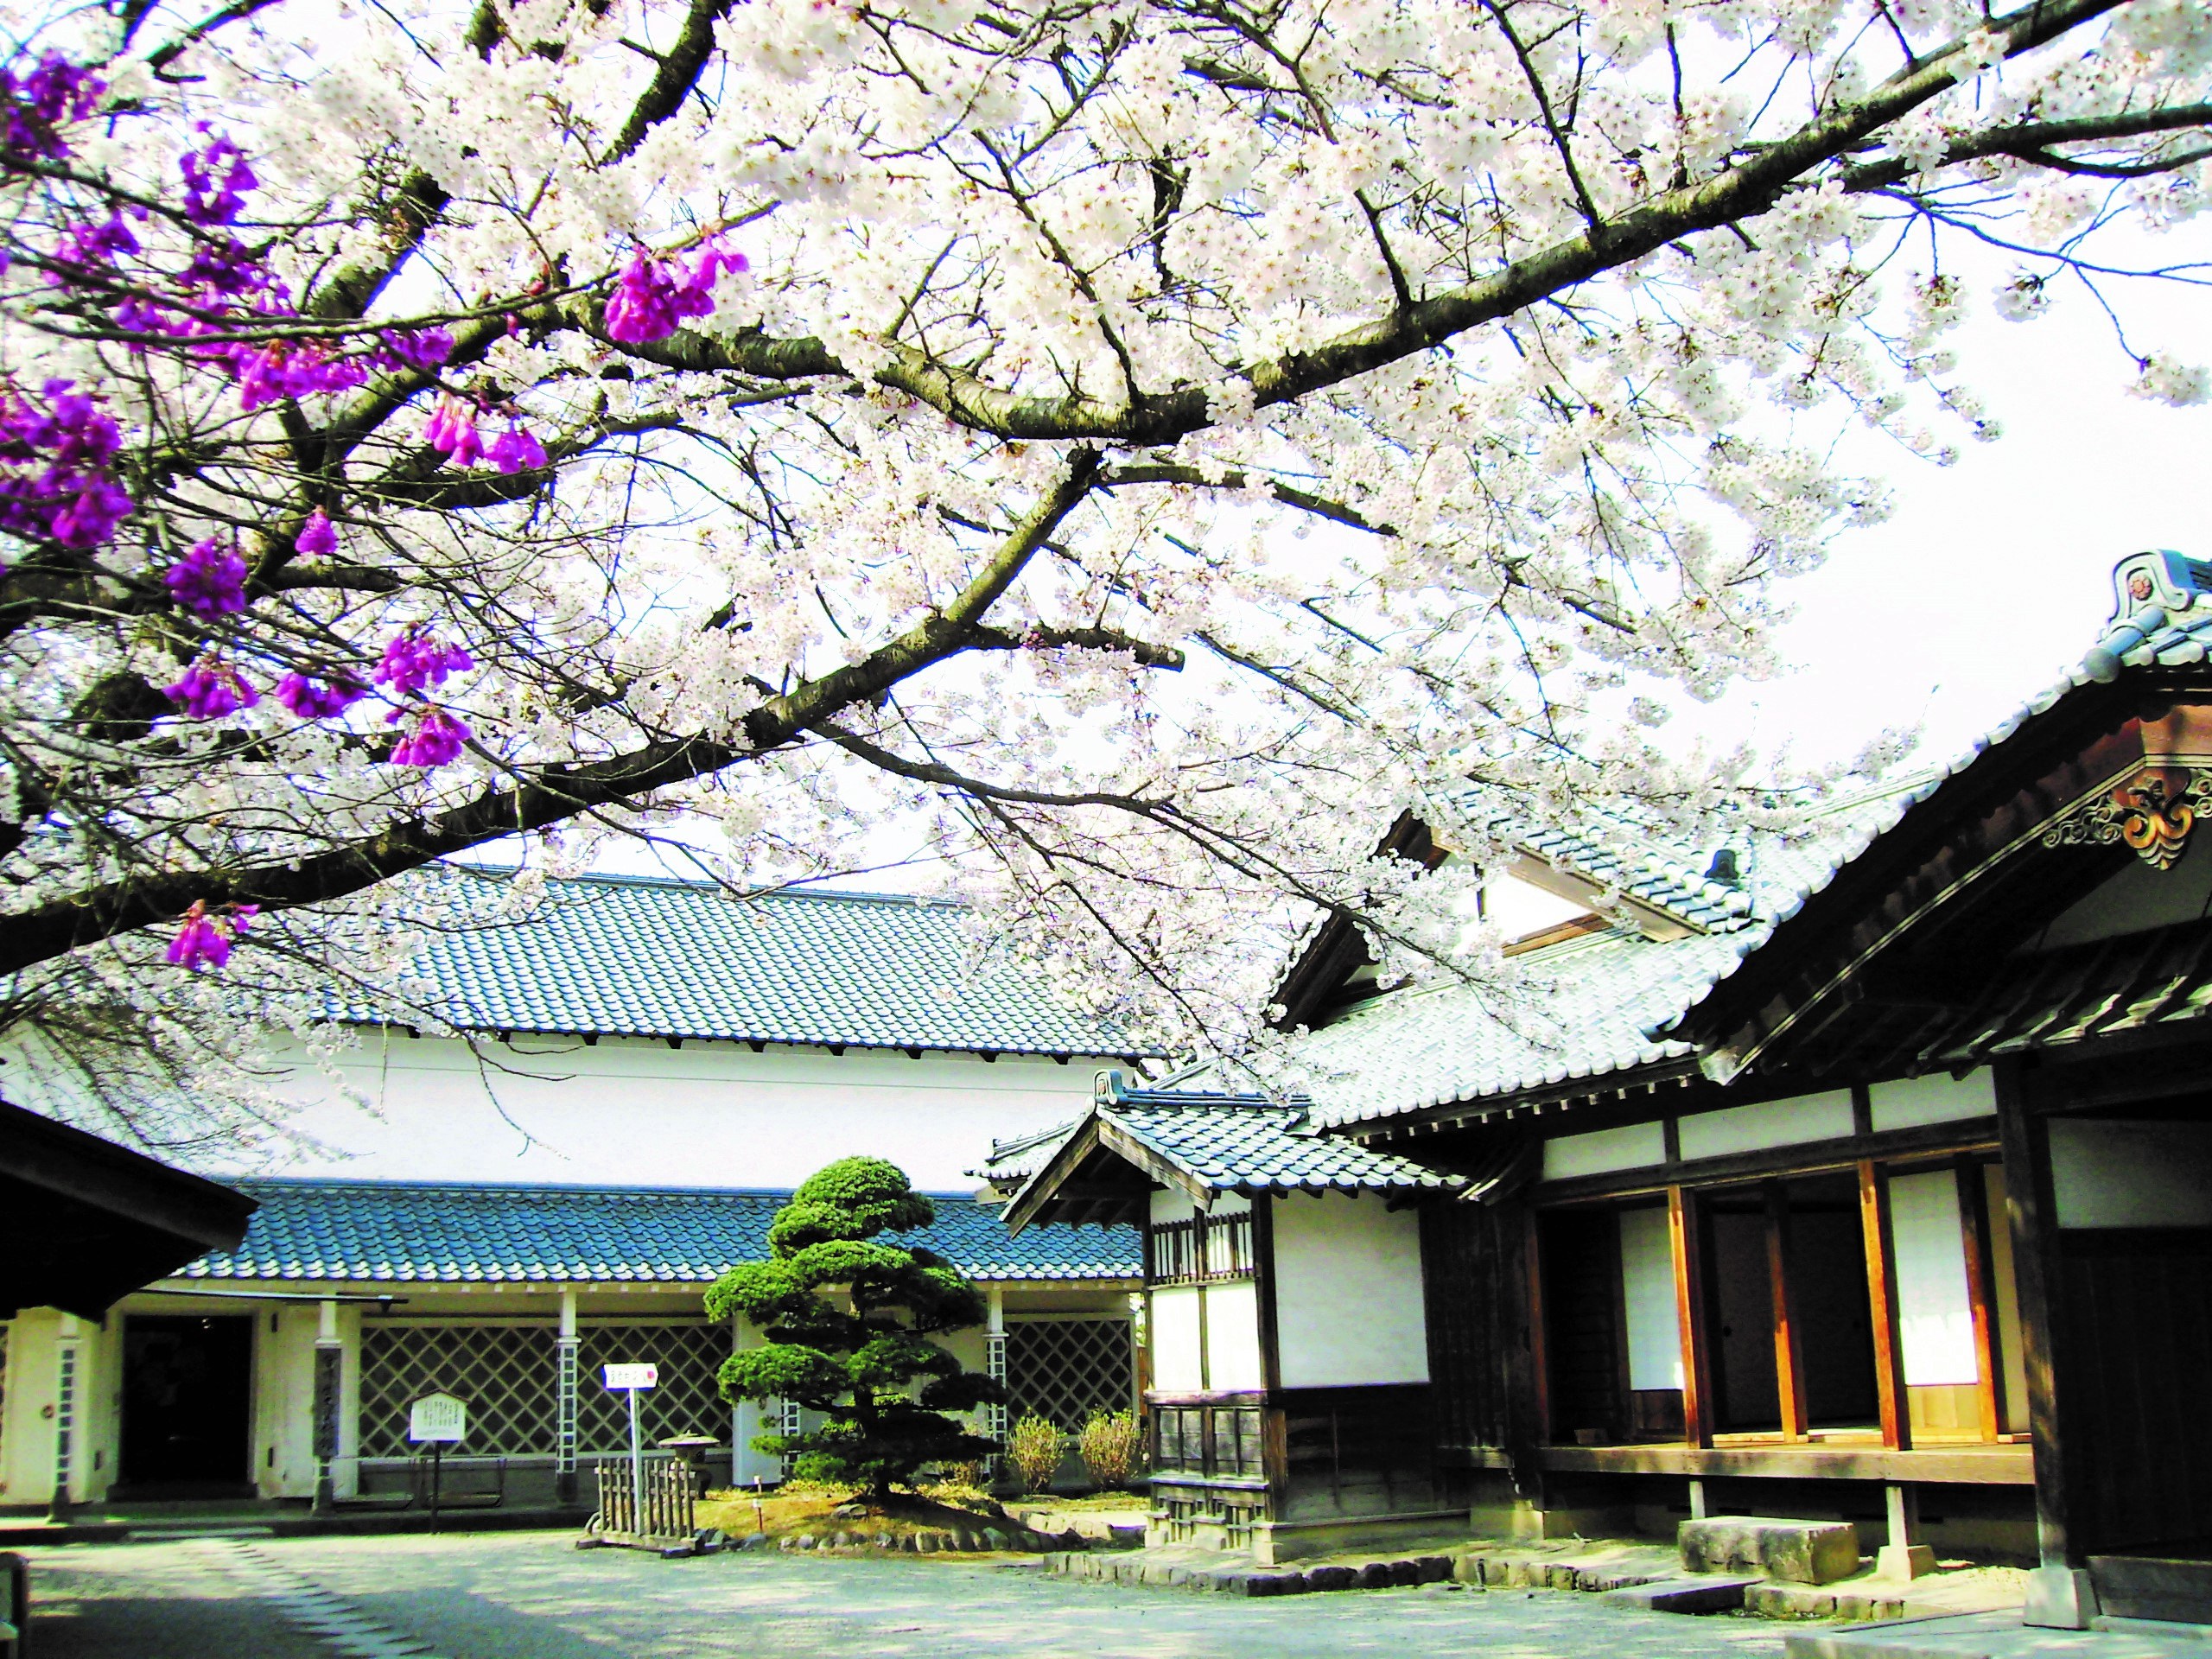 Samurai ở Fukushima 5 4 địa danh nên ghé để trải nghiệm tinh thần Samurai ở Fukushima